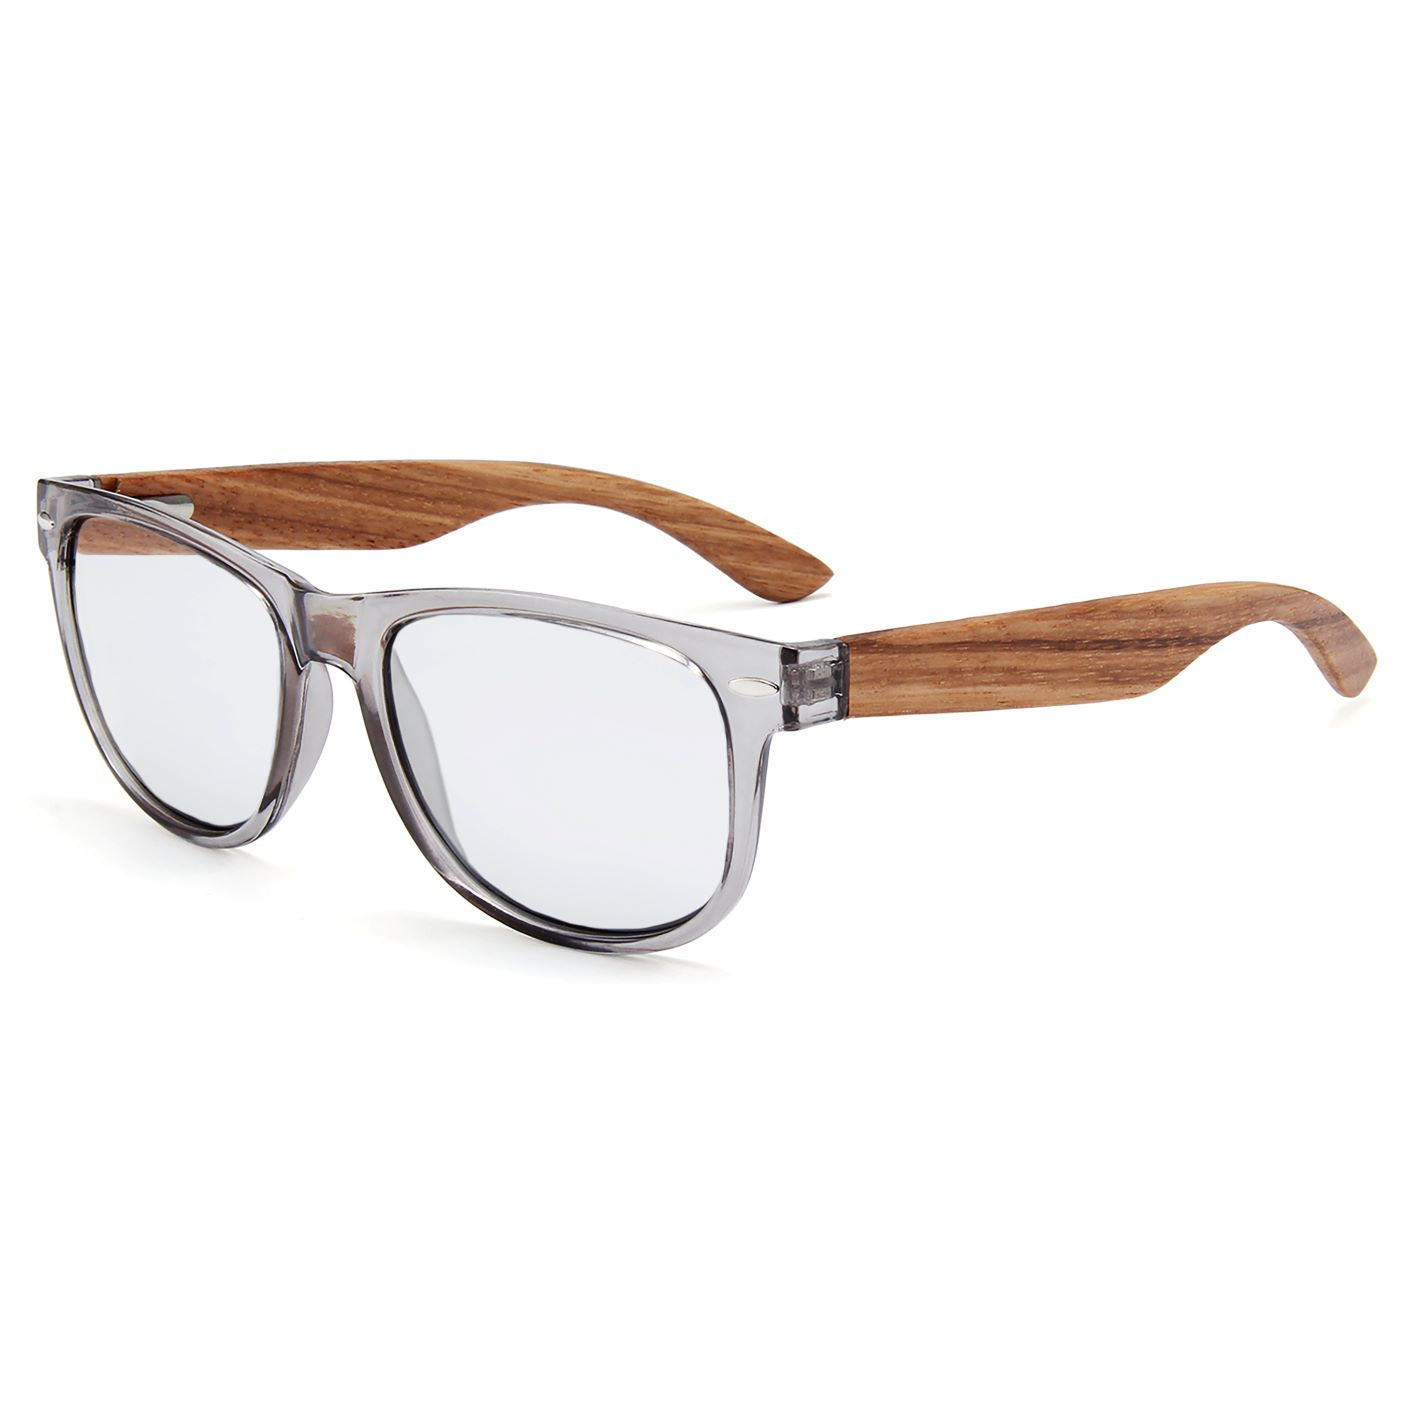 Kuma Eyewear - Blue Blocker Glasses